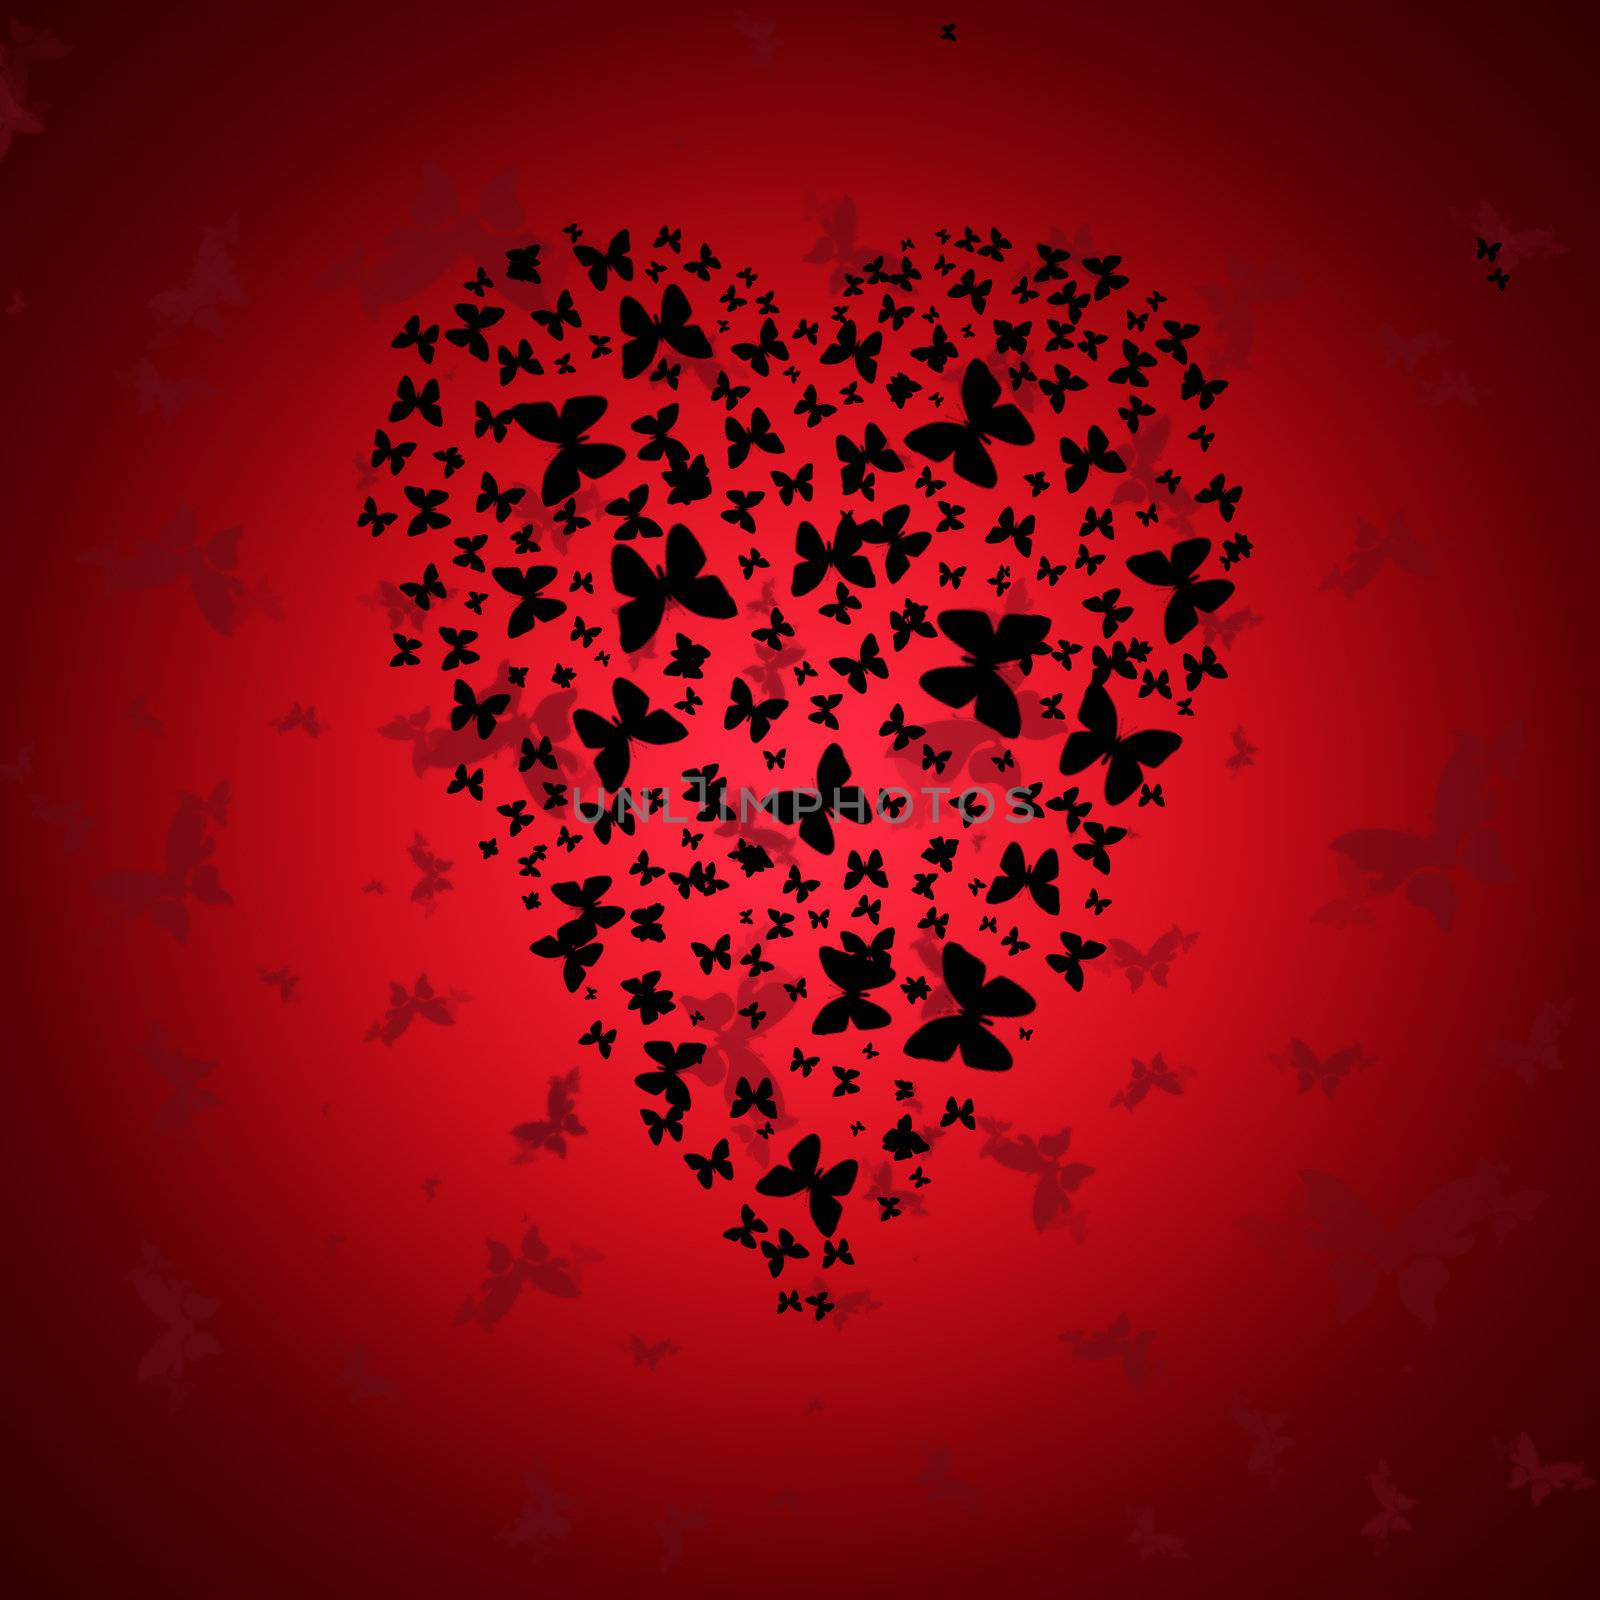 Heart from butterflies by alena0509